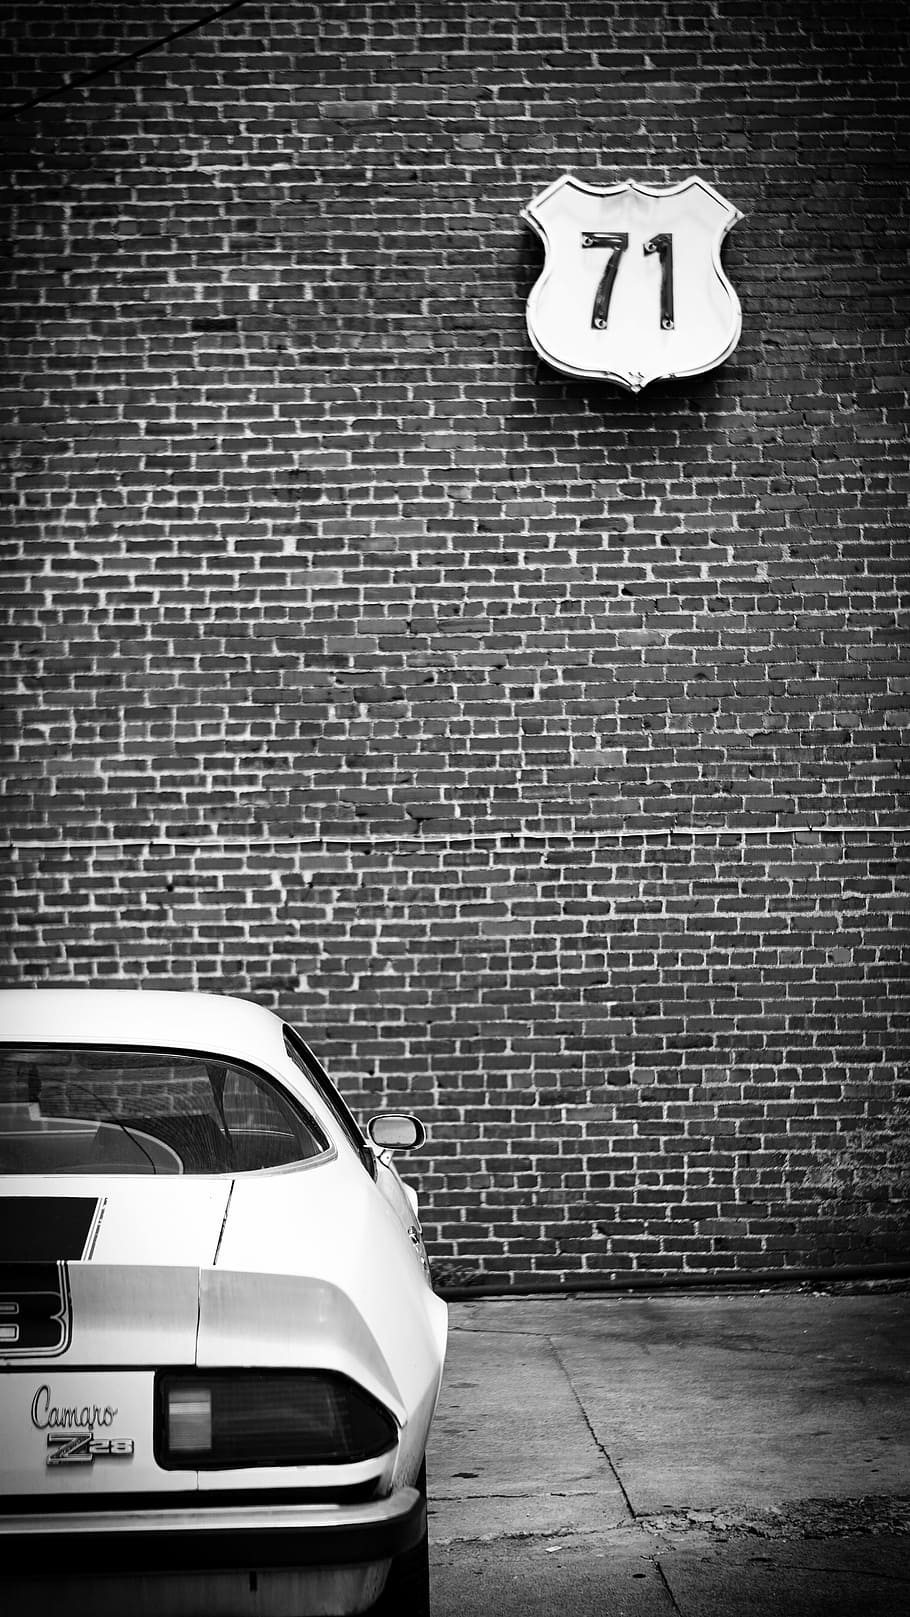 carro, preto e branco, transporte, vintage, retrô, tijolo, parede, cidade, rua, muscle car